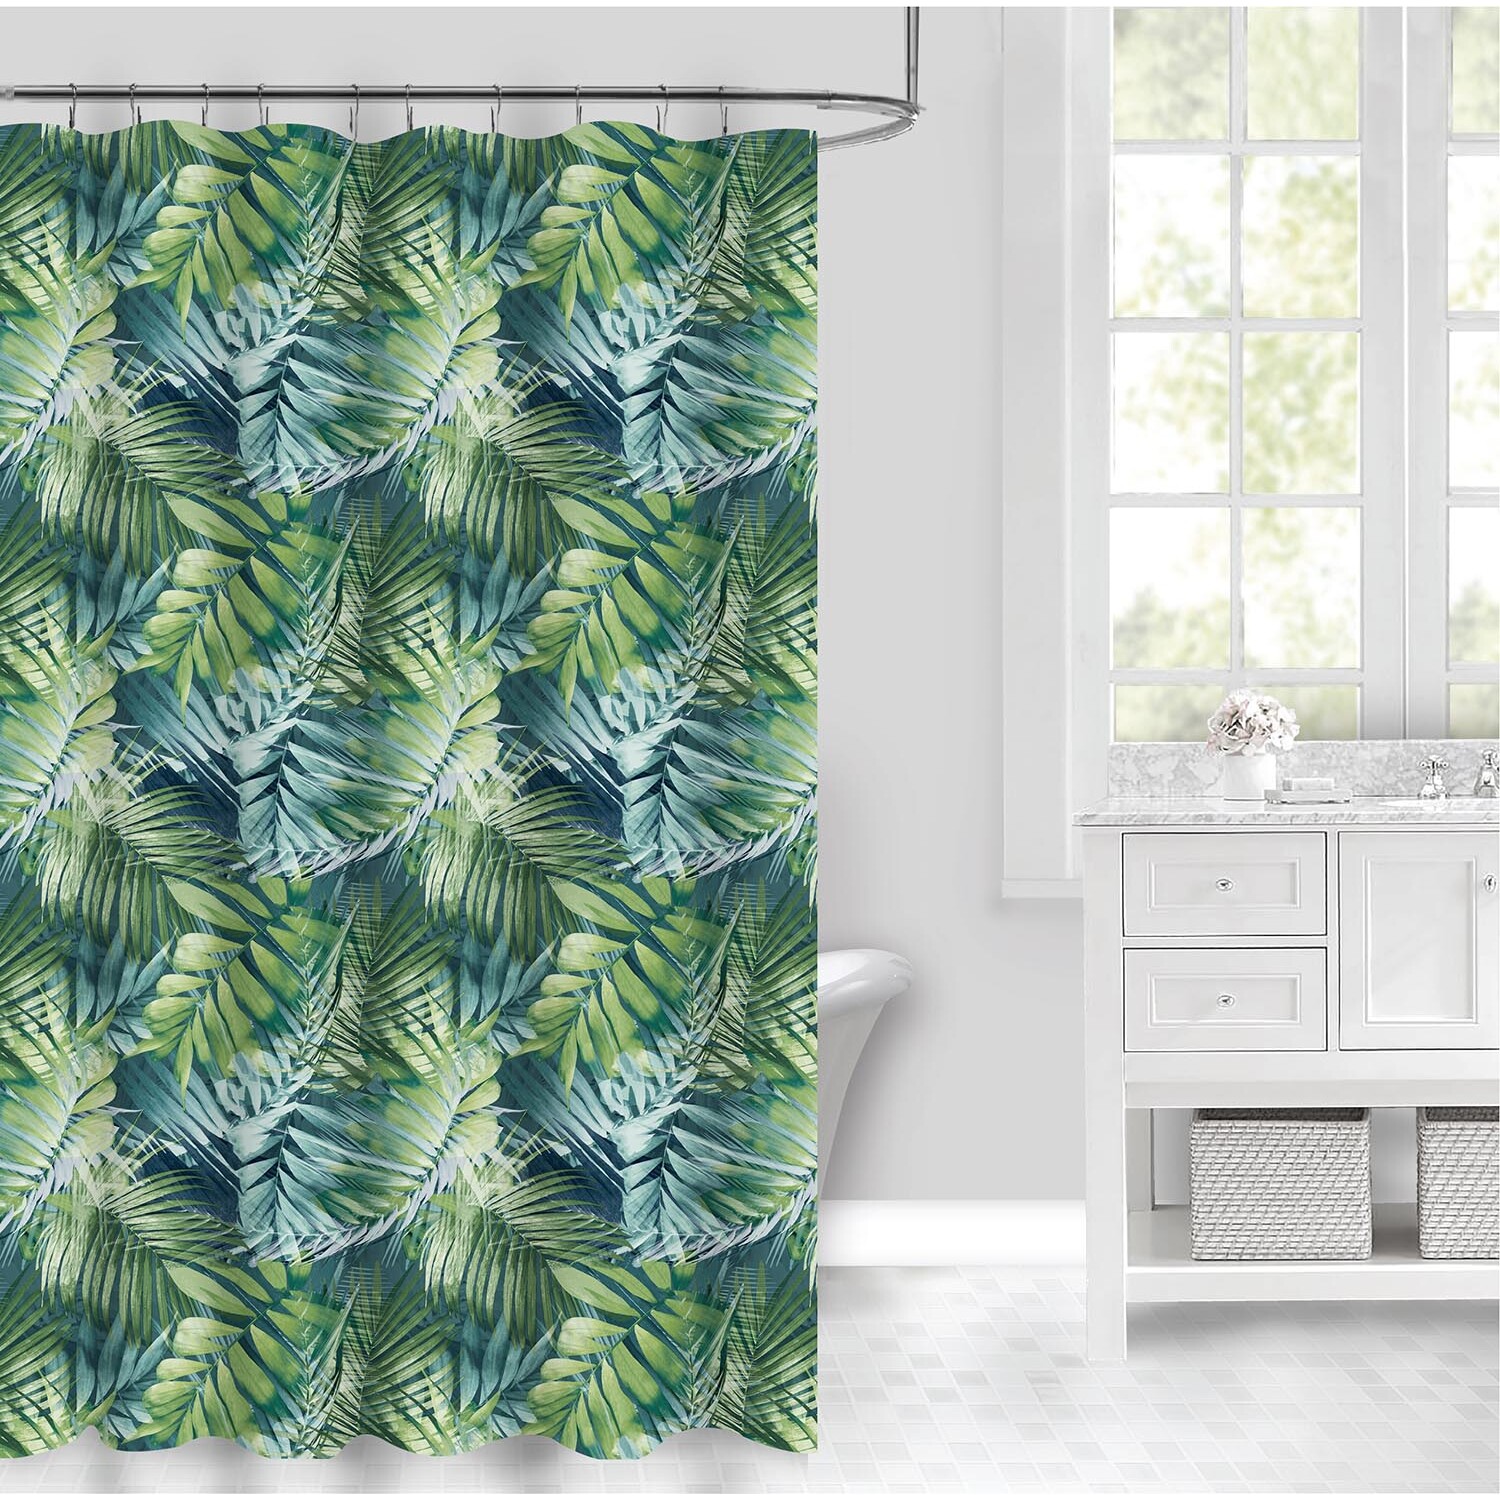 Jungle Leaf Shower Curtain 180 x 180cm Image